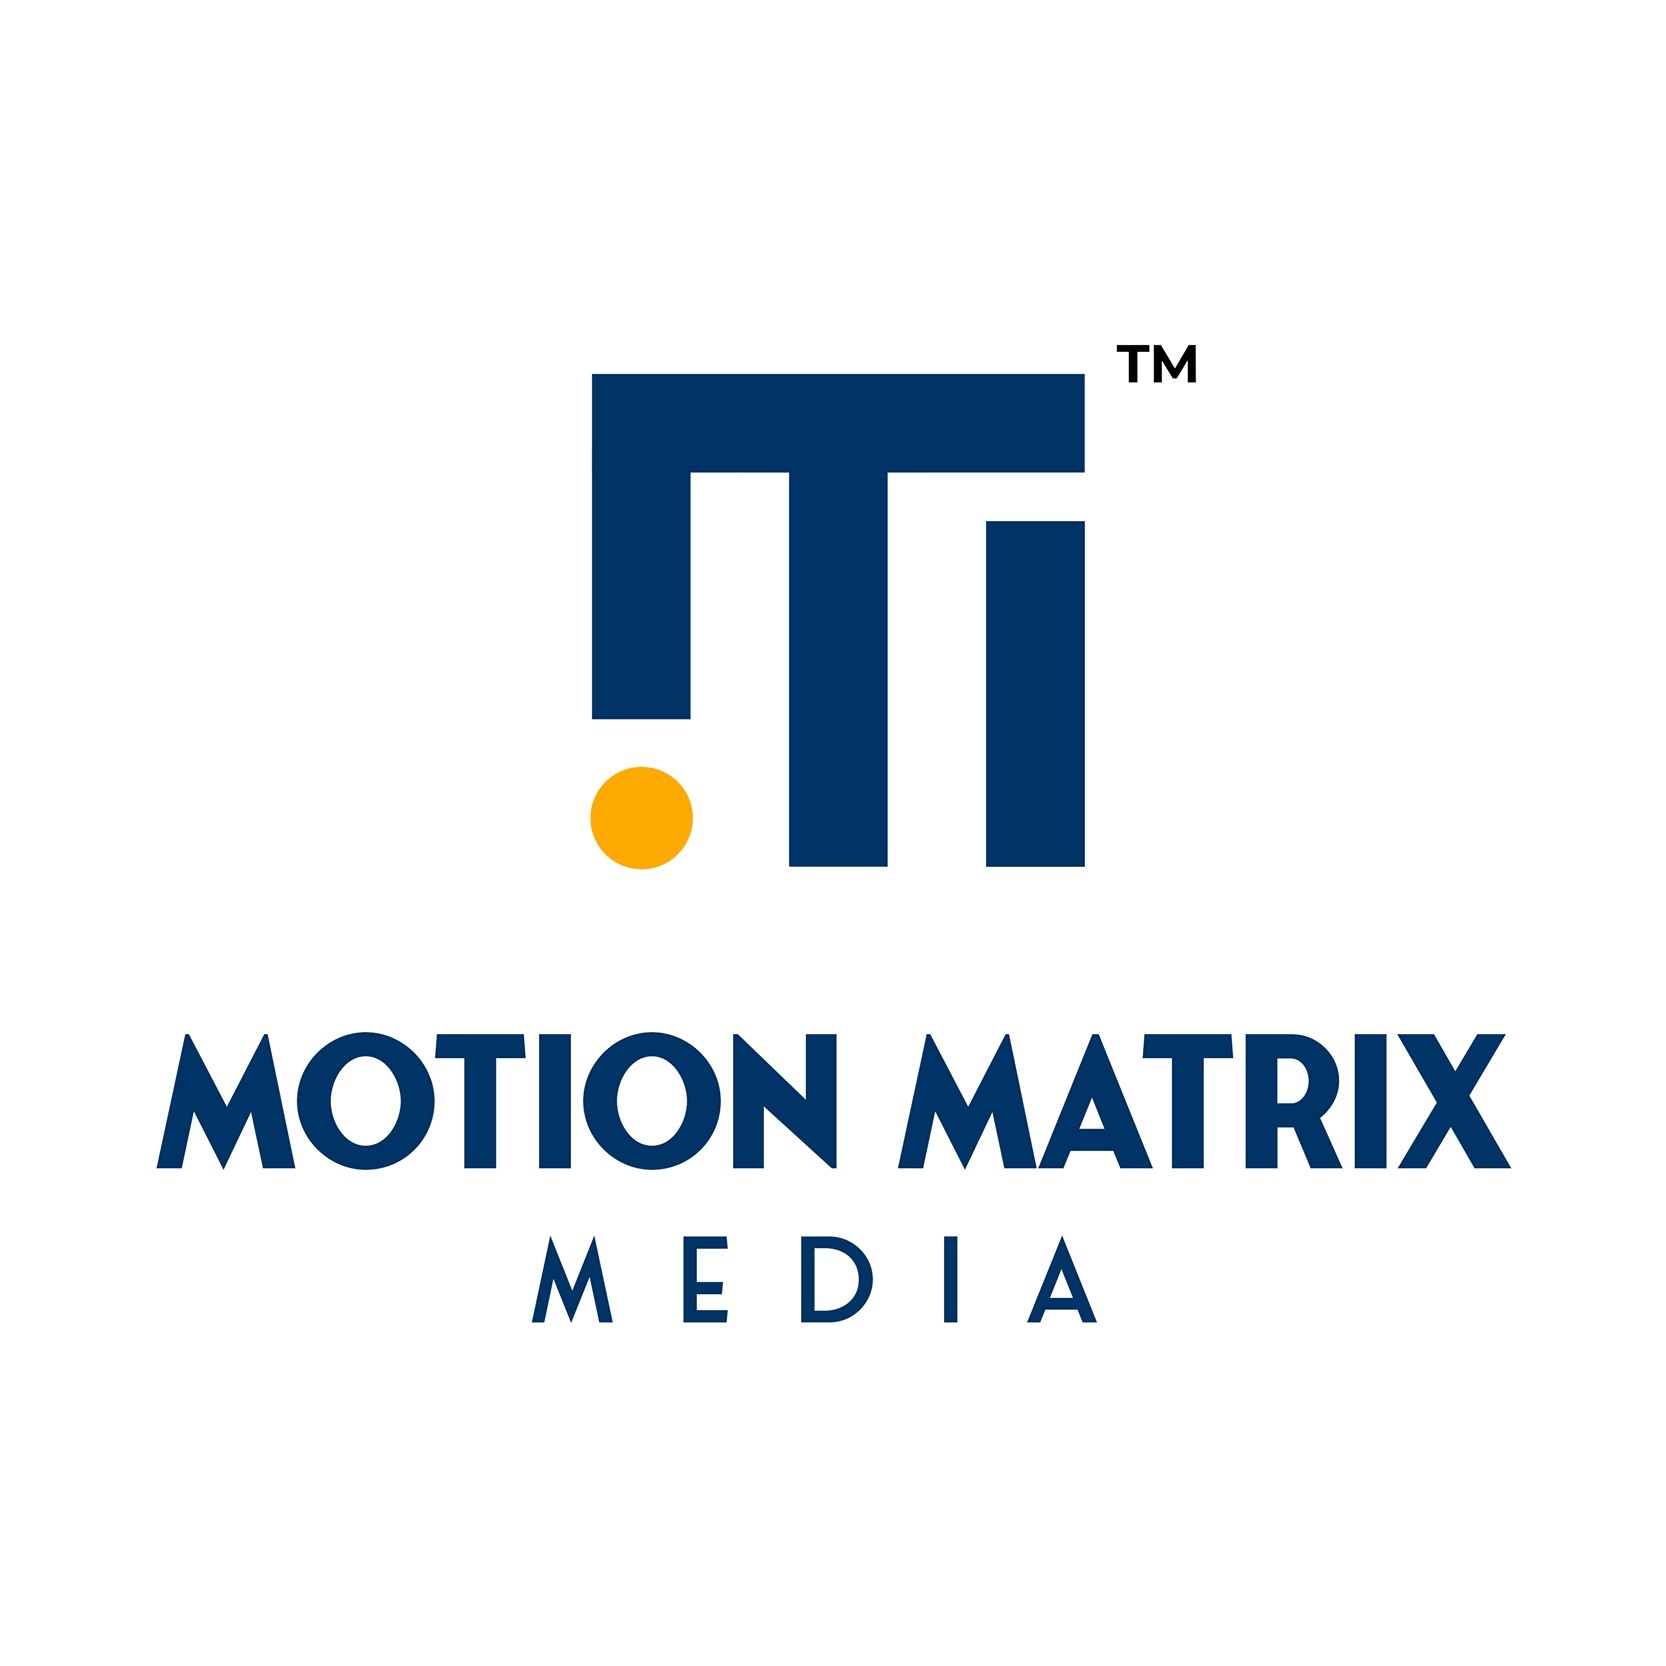 Motion Matrix Media|Legal Services|Professional Services